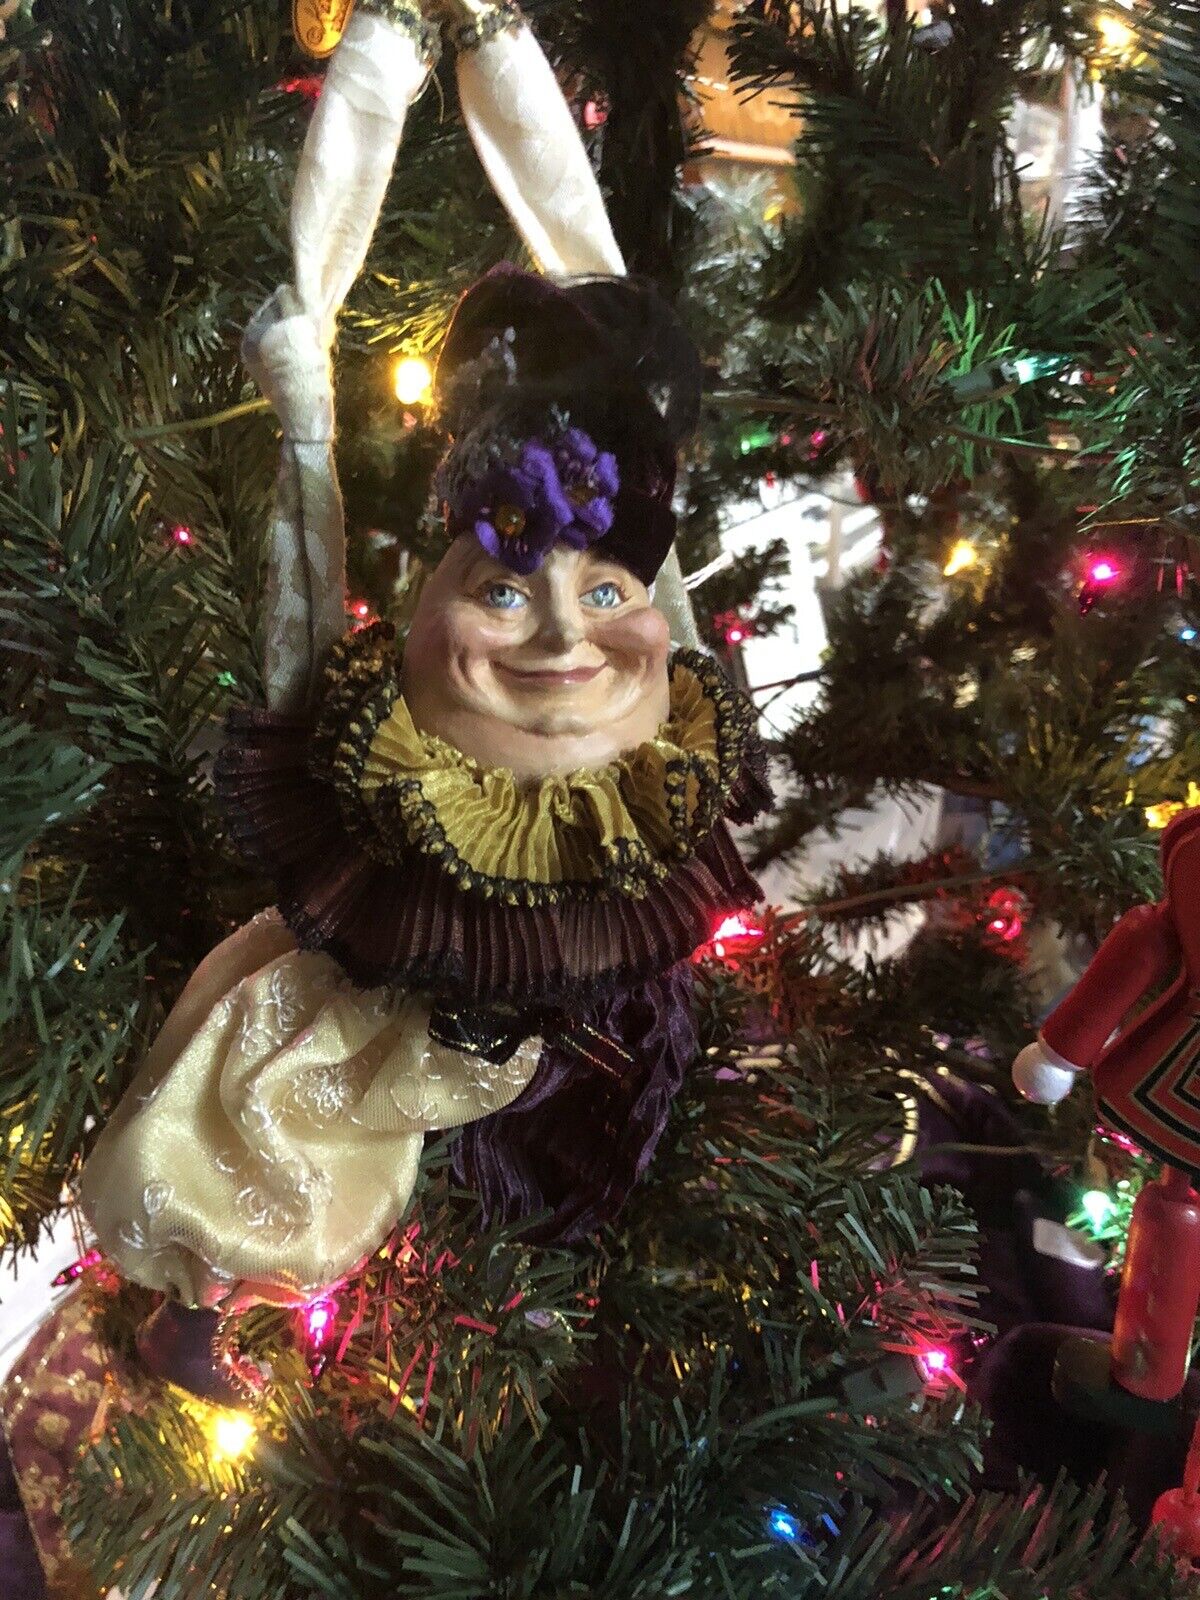 VTG Katherine Collection Humpty Dumpty Christmas Ornaments